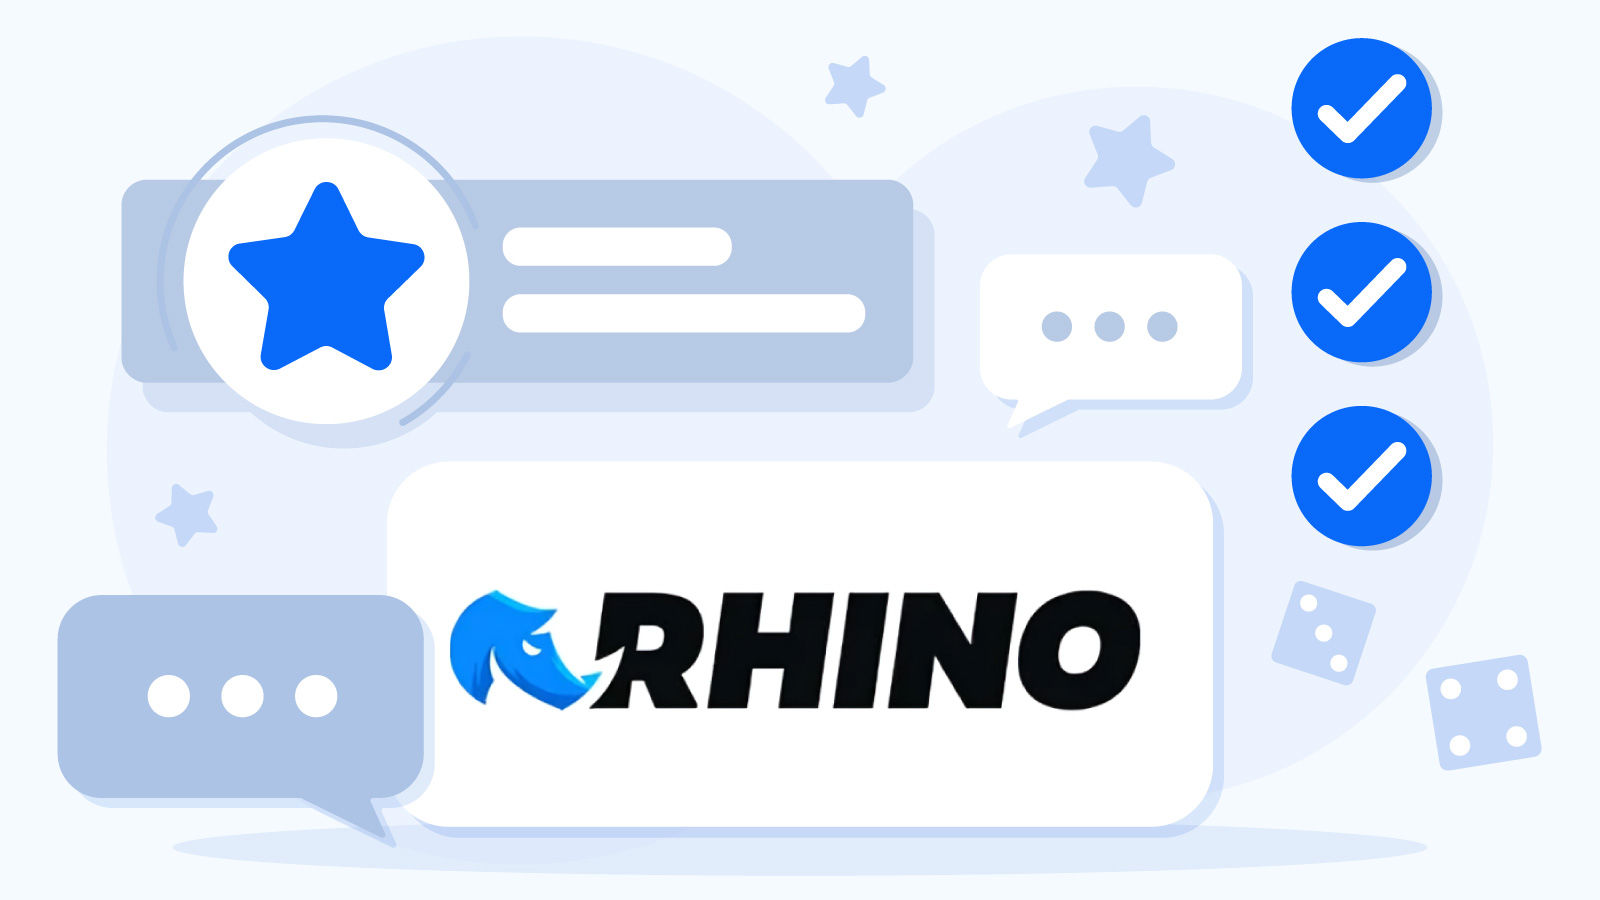 Alpha’s Insights on Rhino Bet